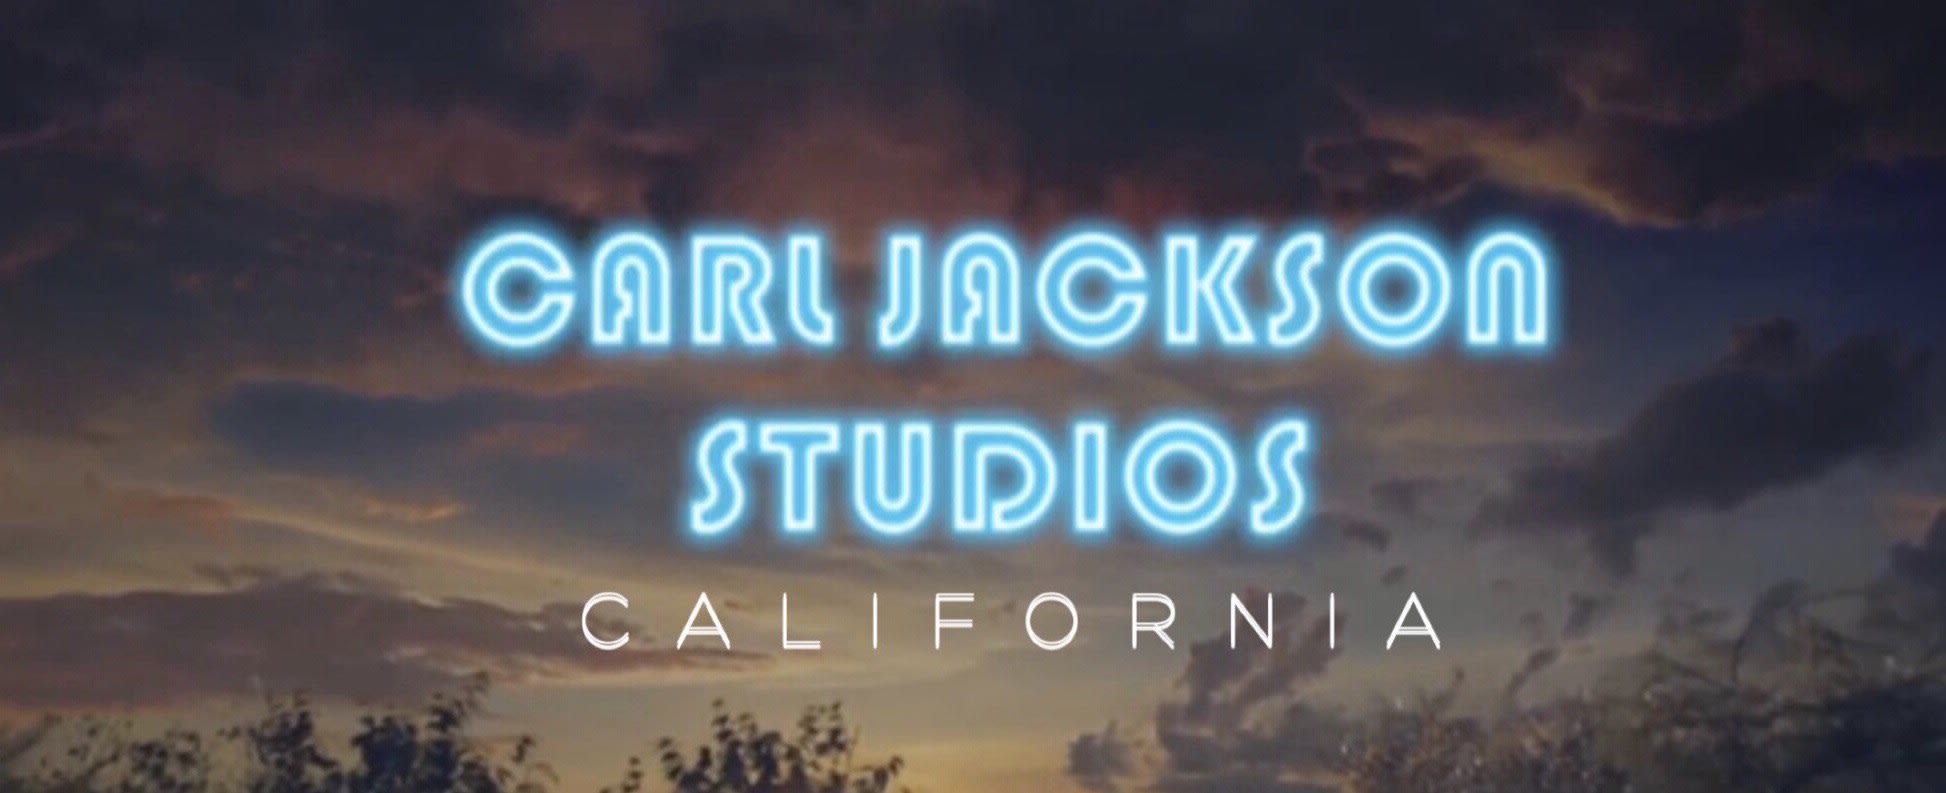 Carl Jackson Studios